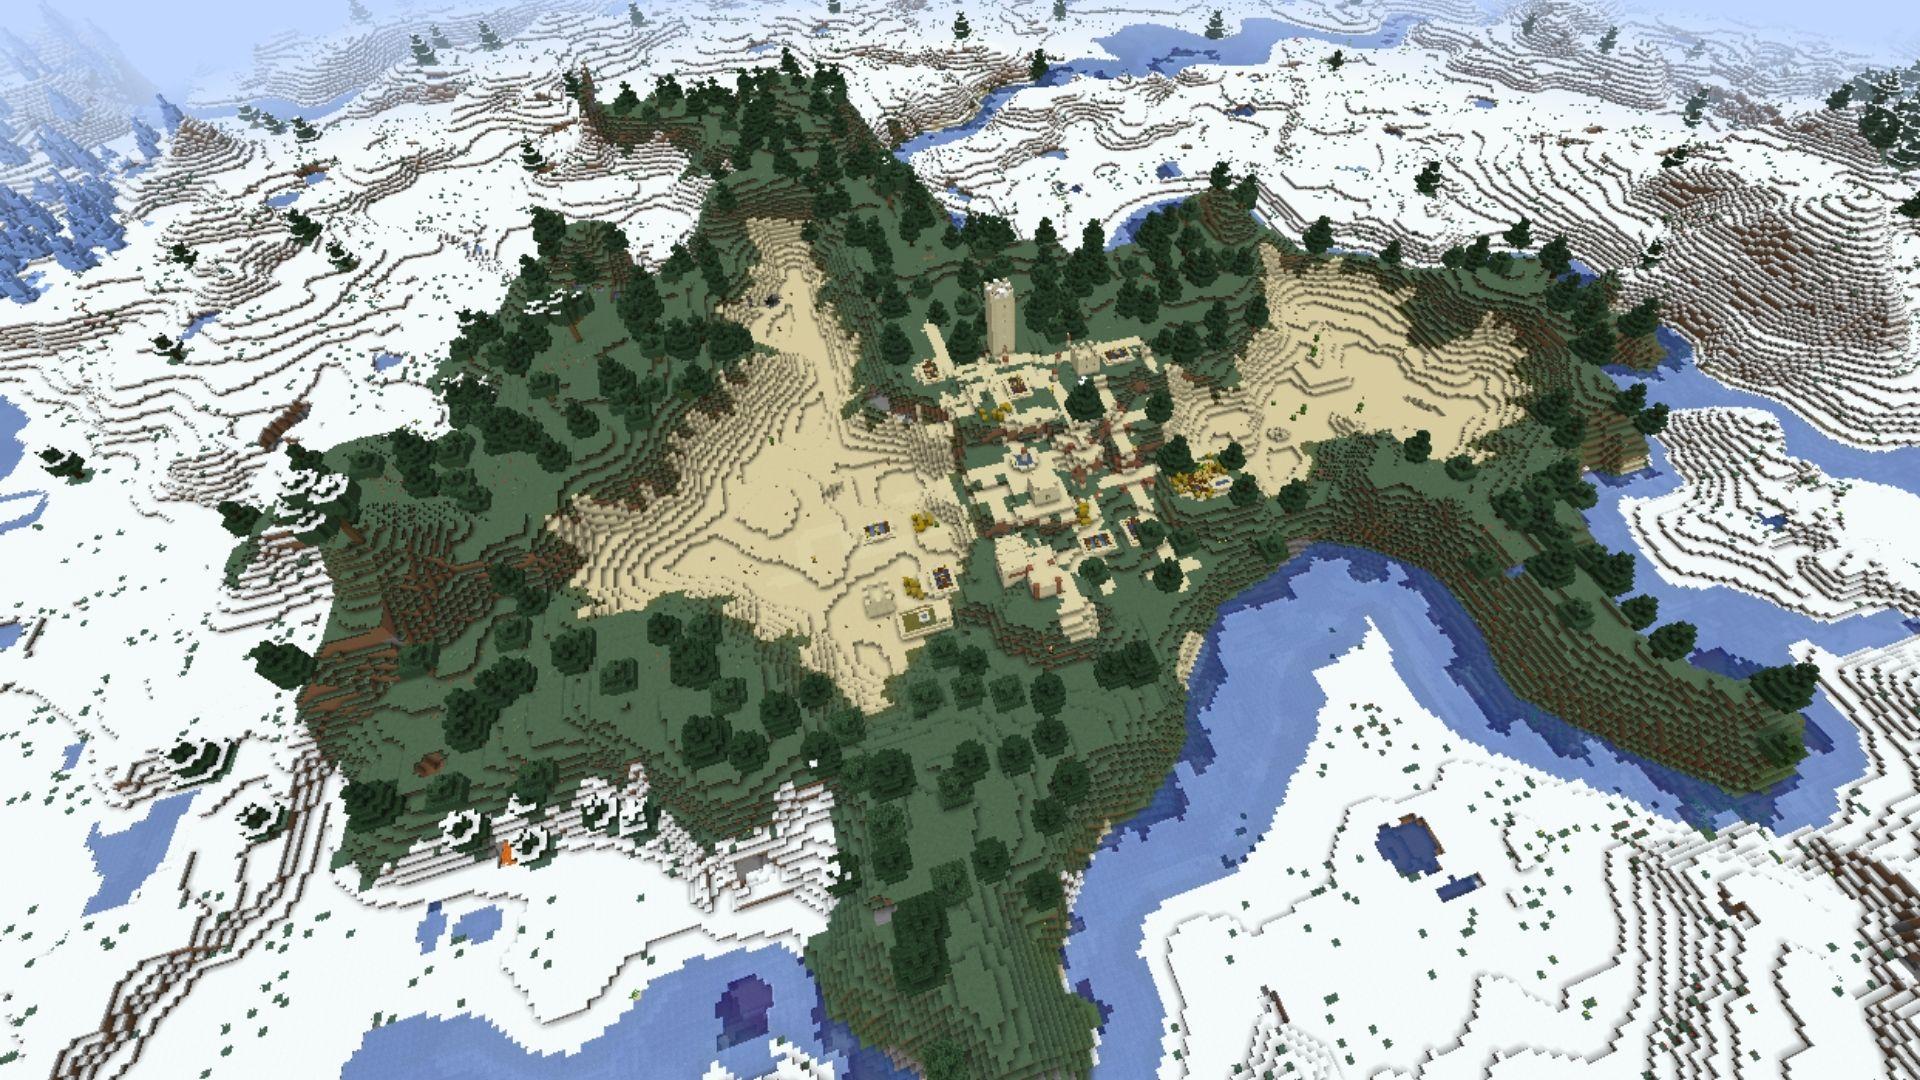 A hidden desert village in Minecraft surrounded by water.